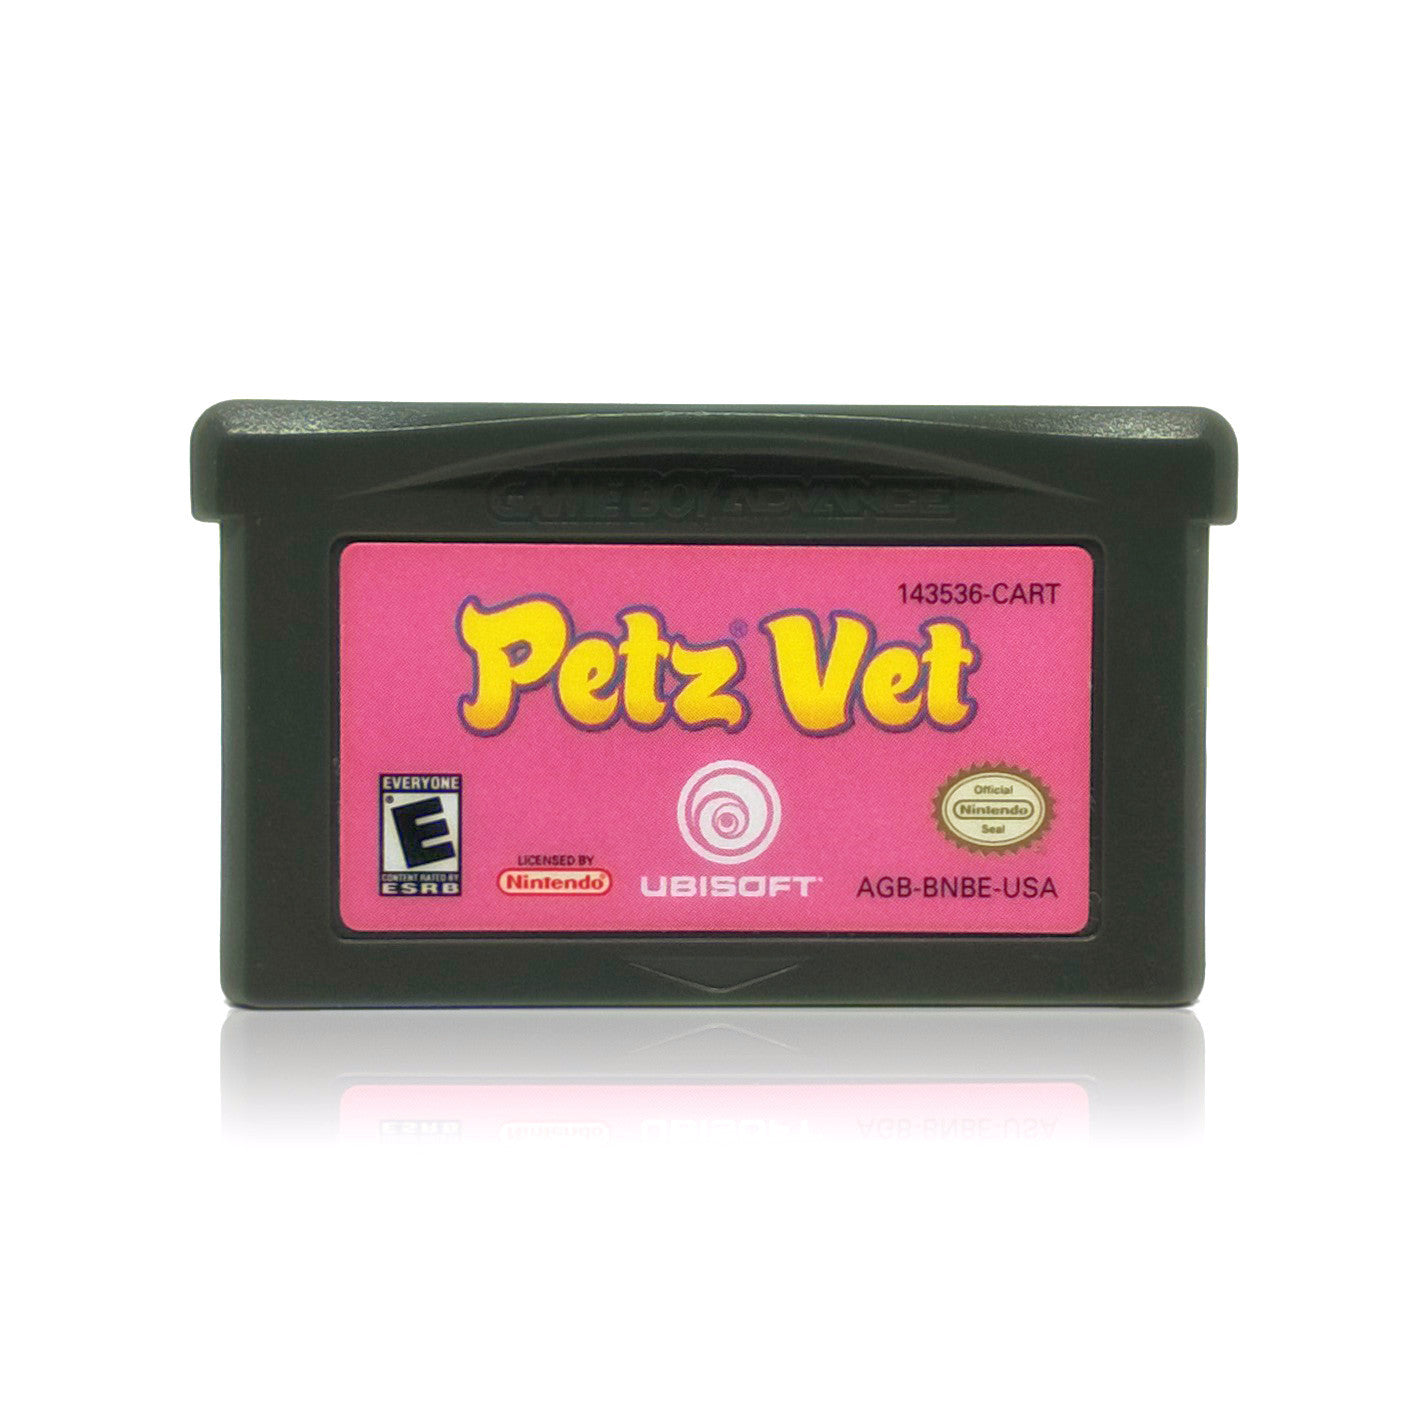 Petz Vet Nintendo GBA Game Boy Advance Game - Cartridge